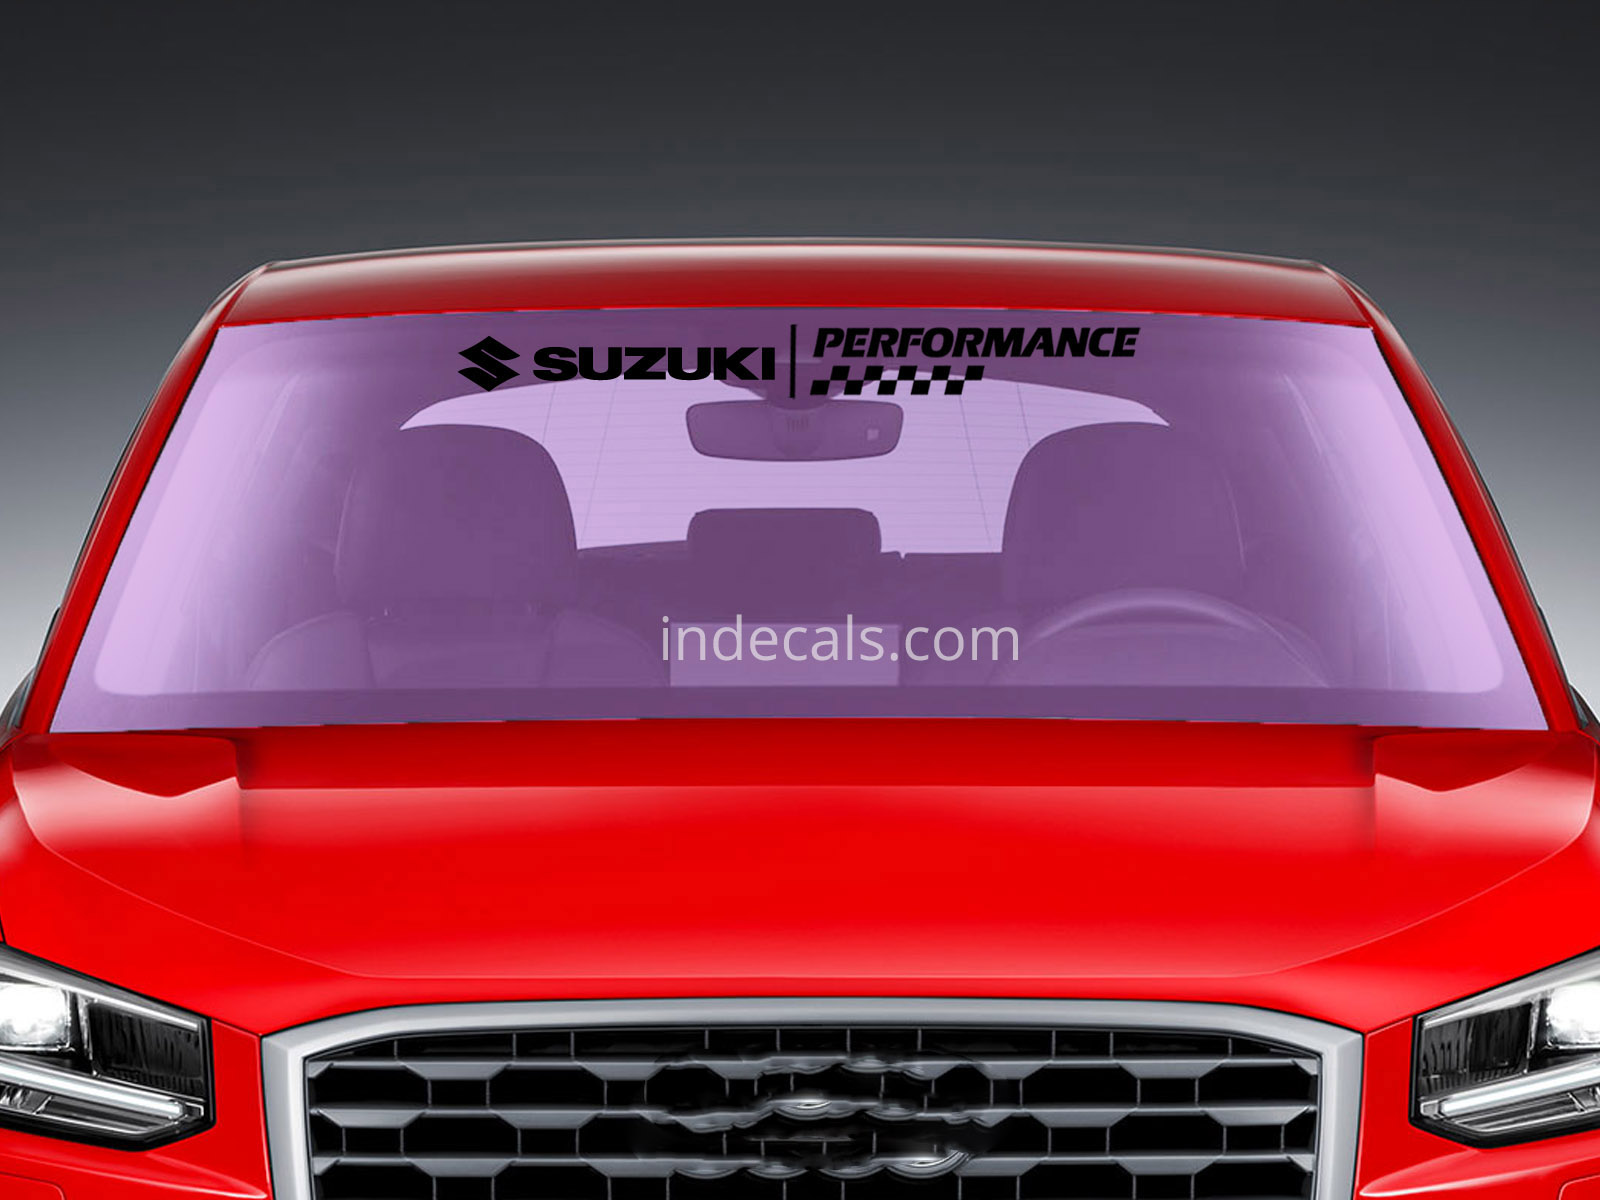 1 x Suzuki Performance Sticker for Windshield or Back Window - Black